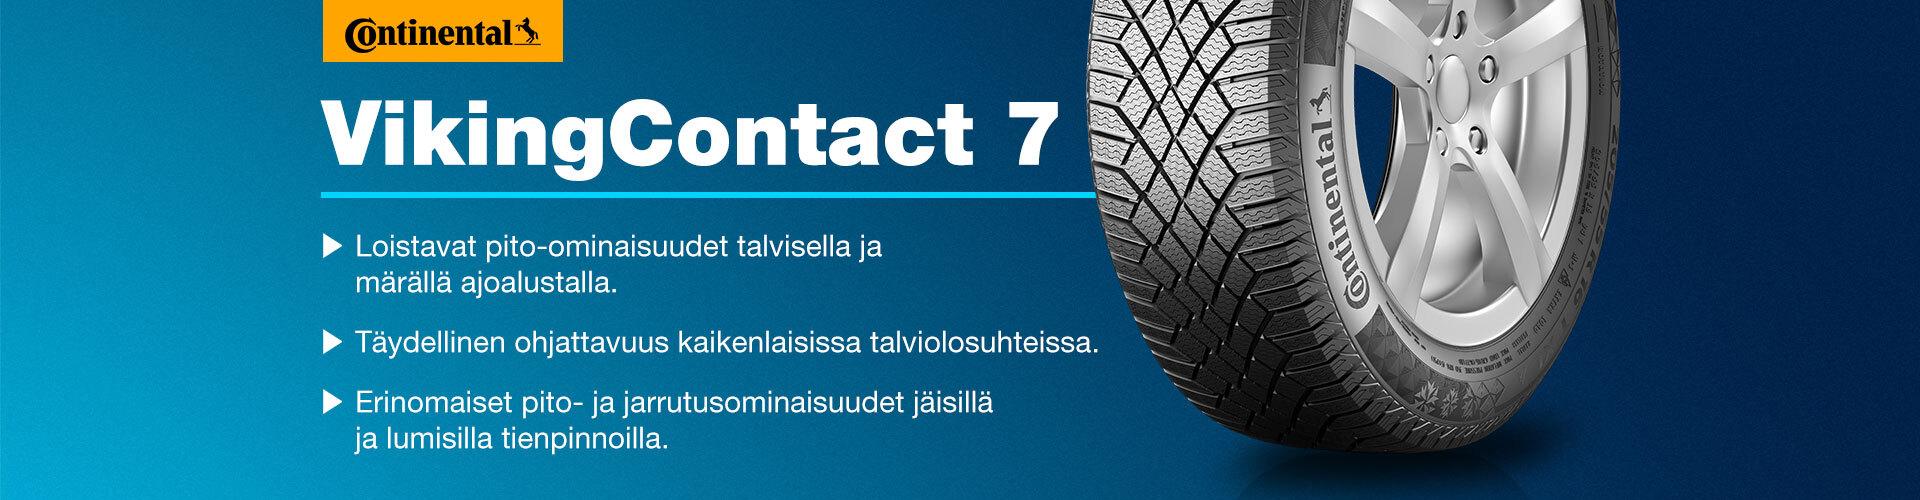 viking-contact-7-banneri-2021